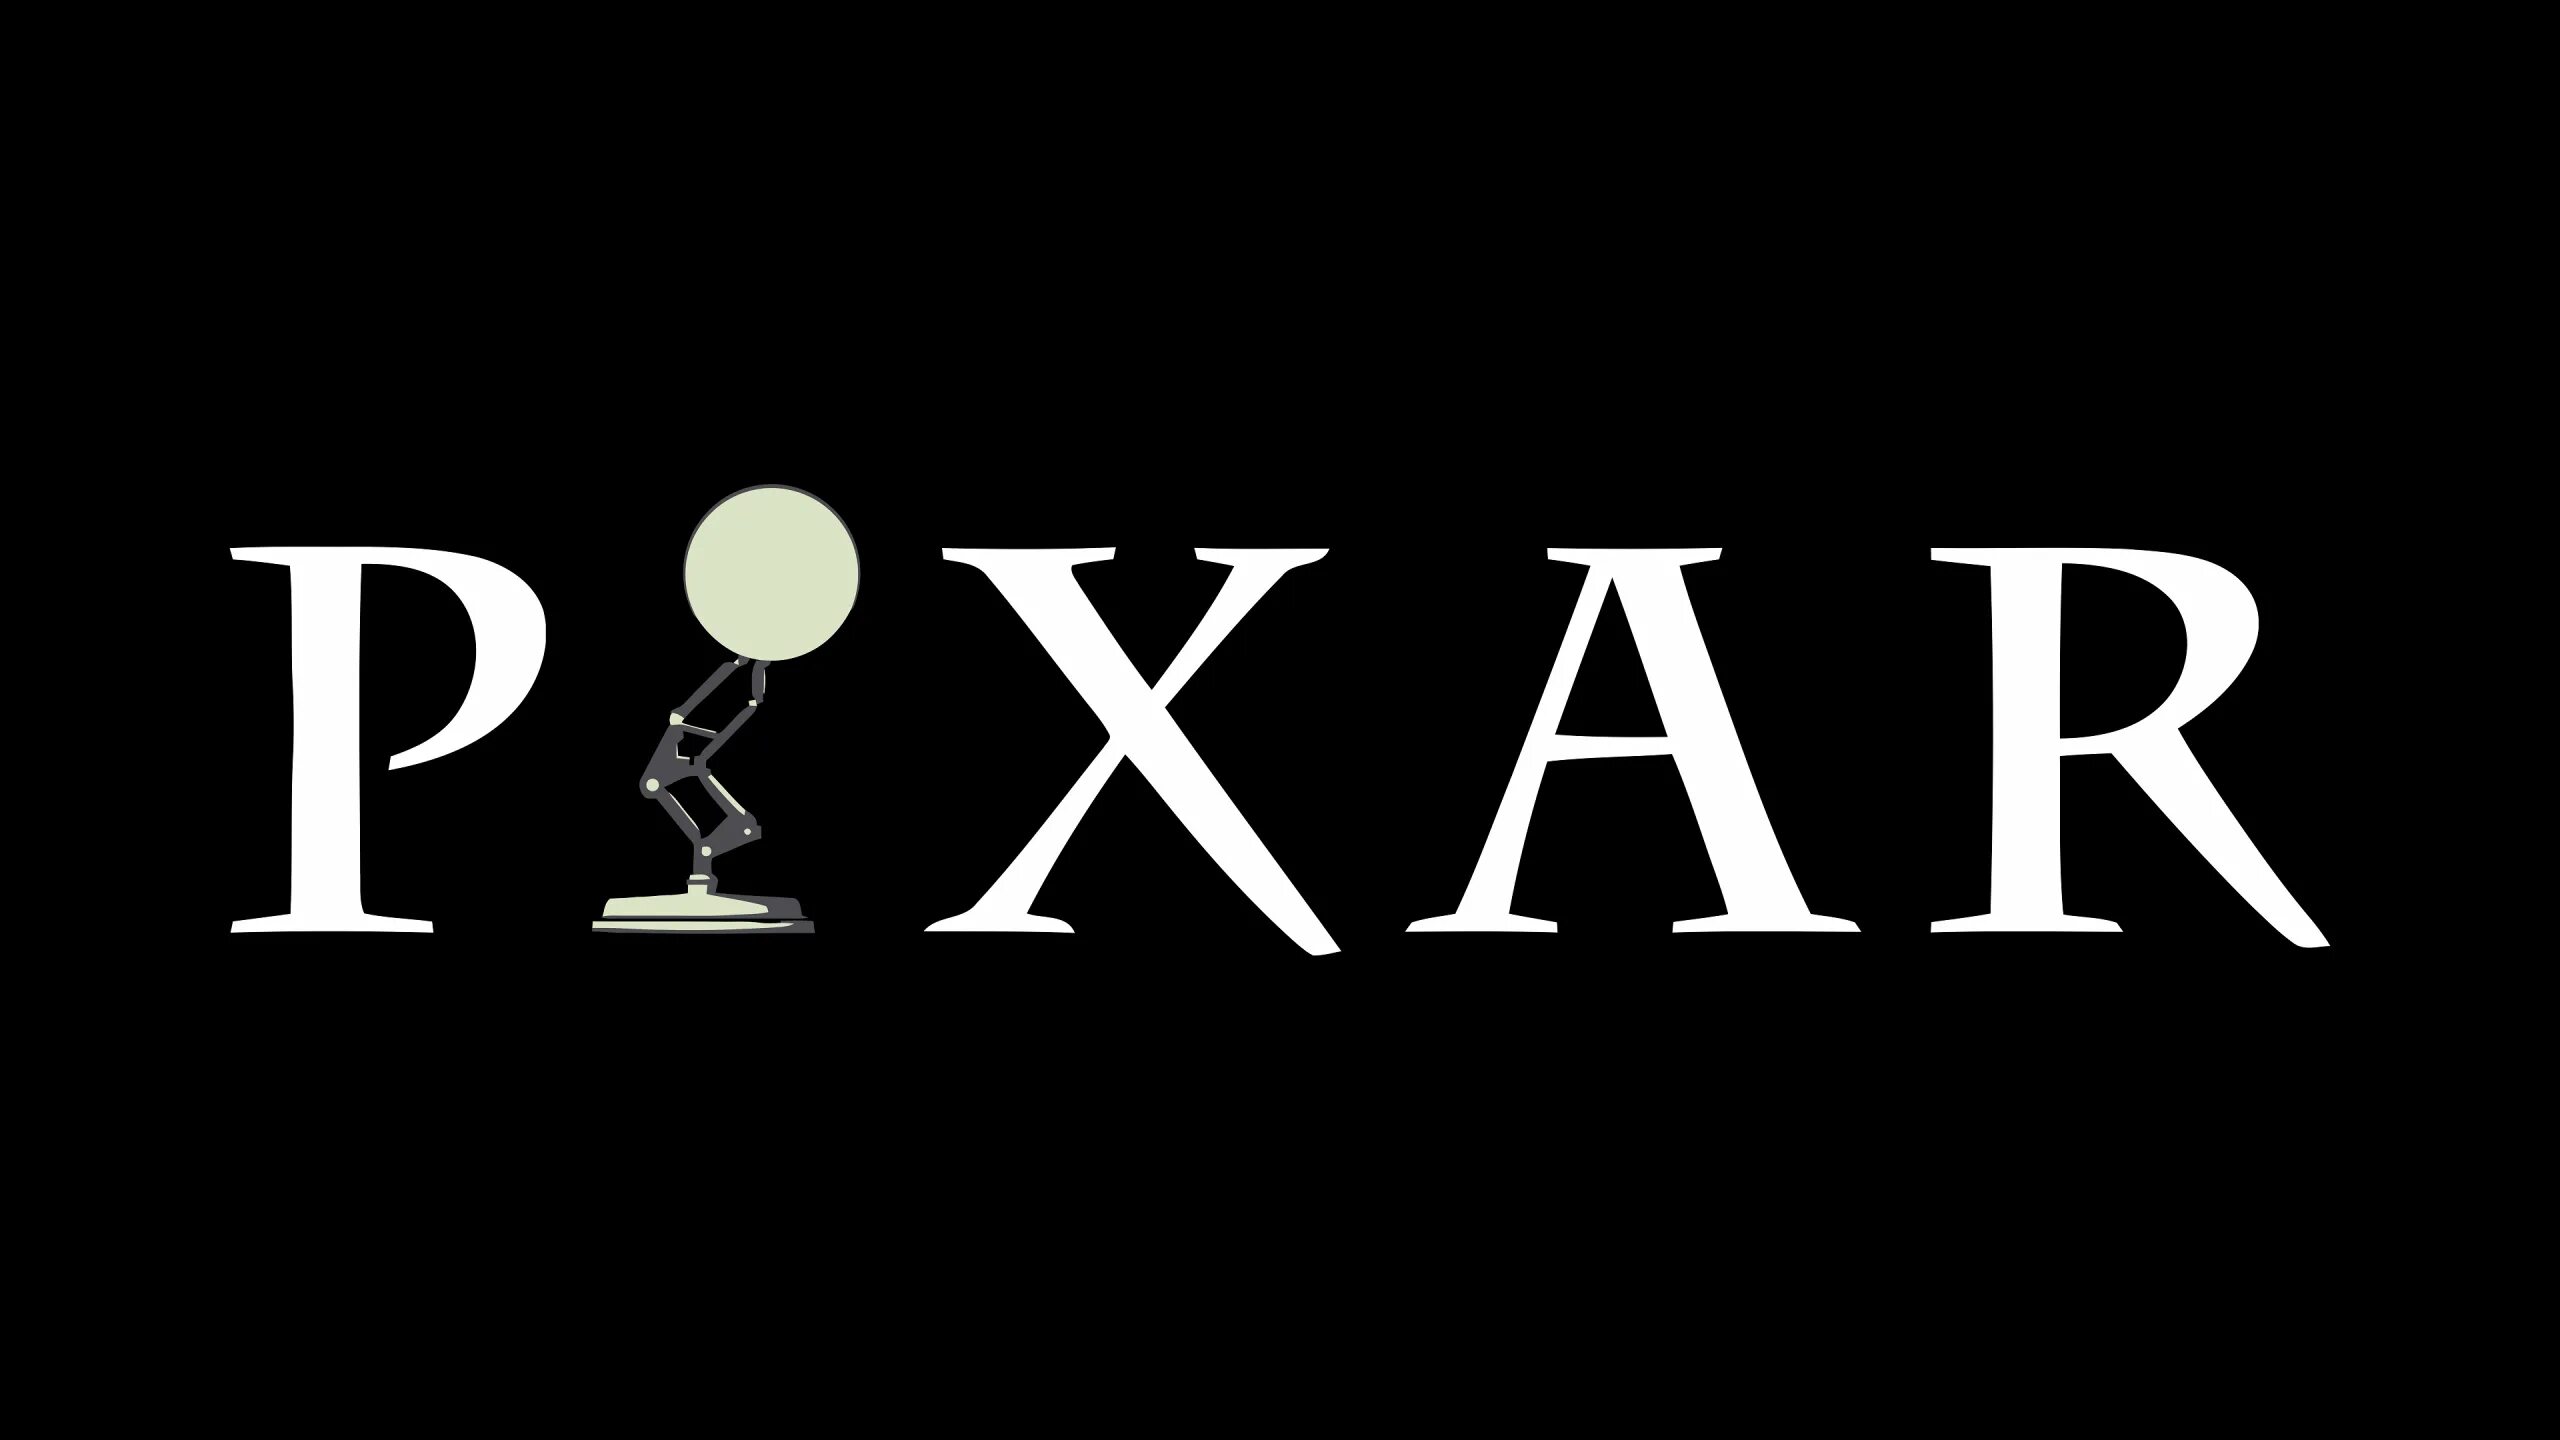 Pixar logo. Логотипы кинокомпаний Пиксар. Логотип студии Пиксар. Киностудия Pixar. Пиксар надпись.